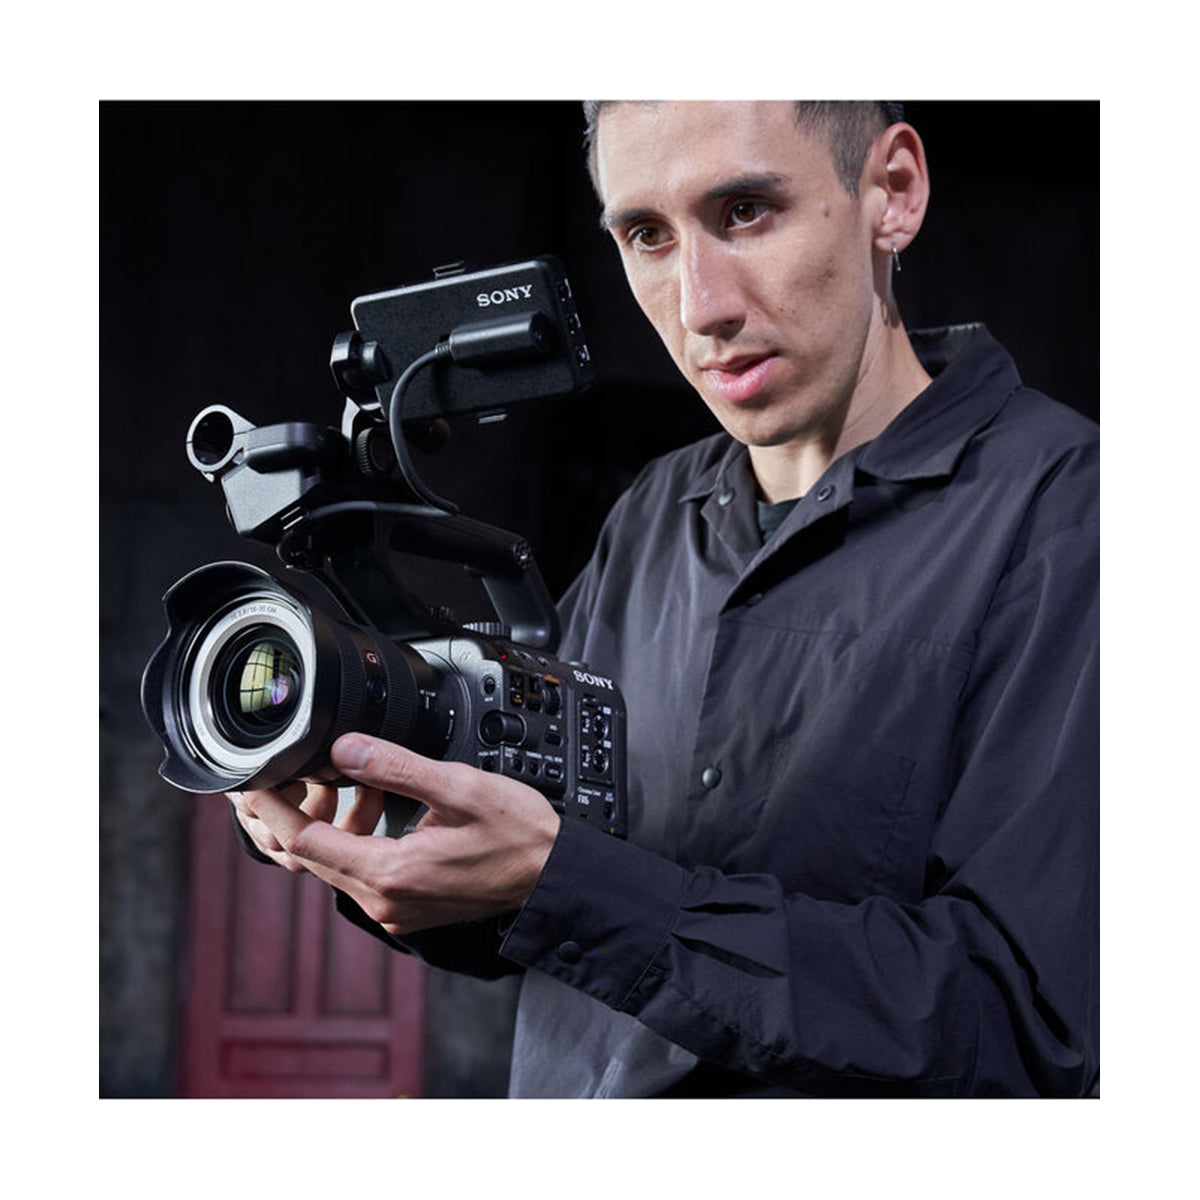 Sony FX6 Full Frame Cinema Camera